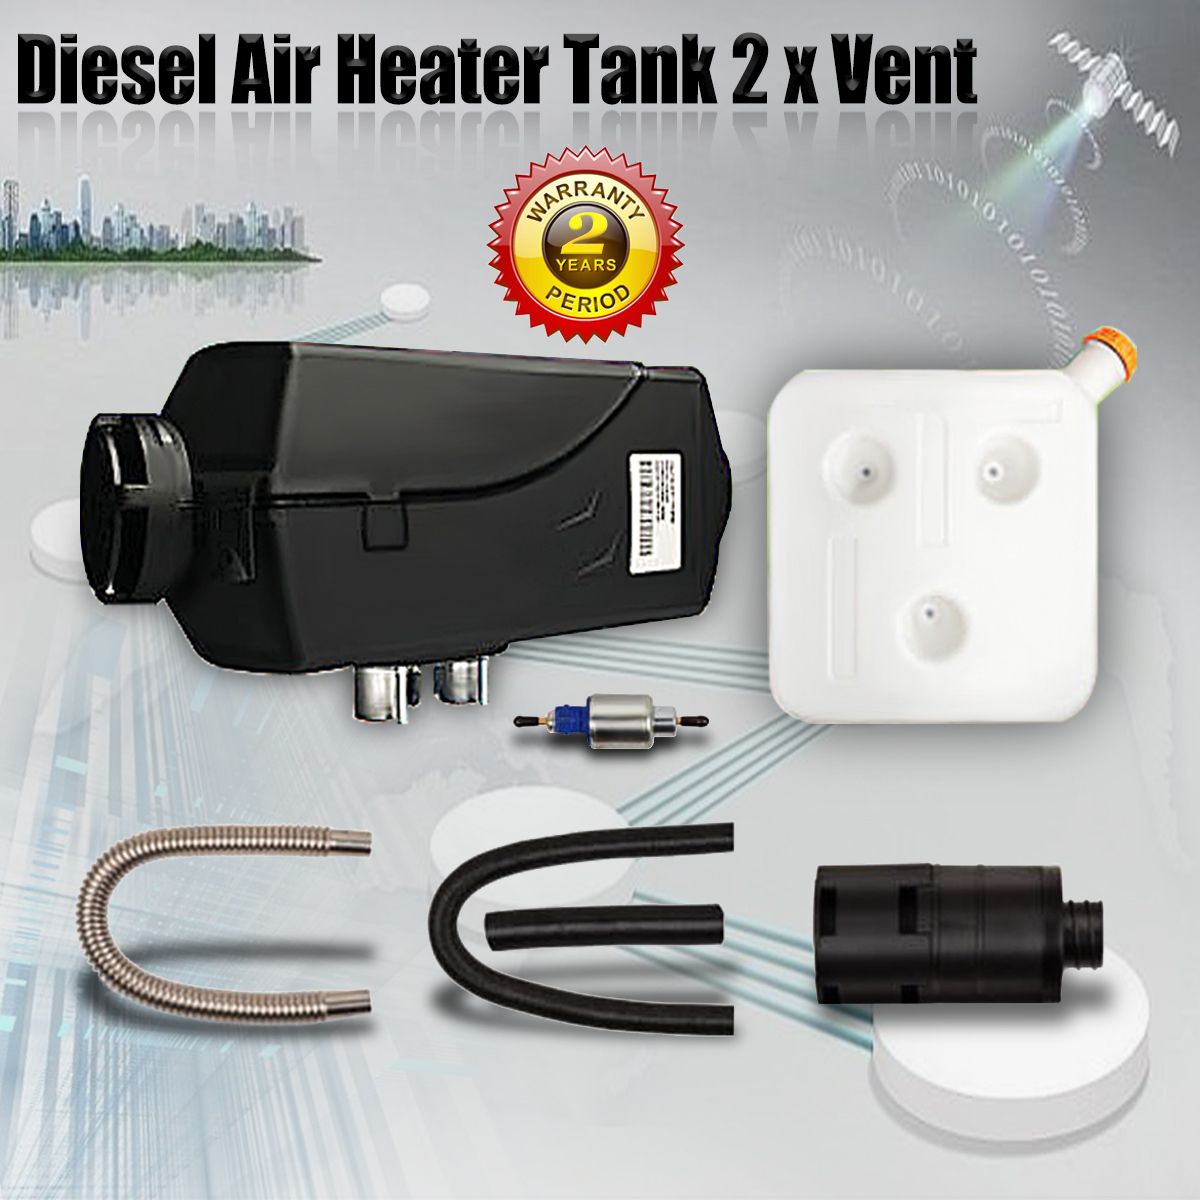 12V-5KW-Diesel-Air-Parking-Heater-Diesel-Heating-Air-Parking-Heater-with-Switch-1265867